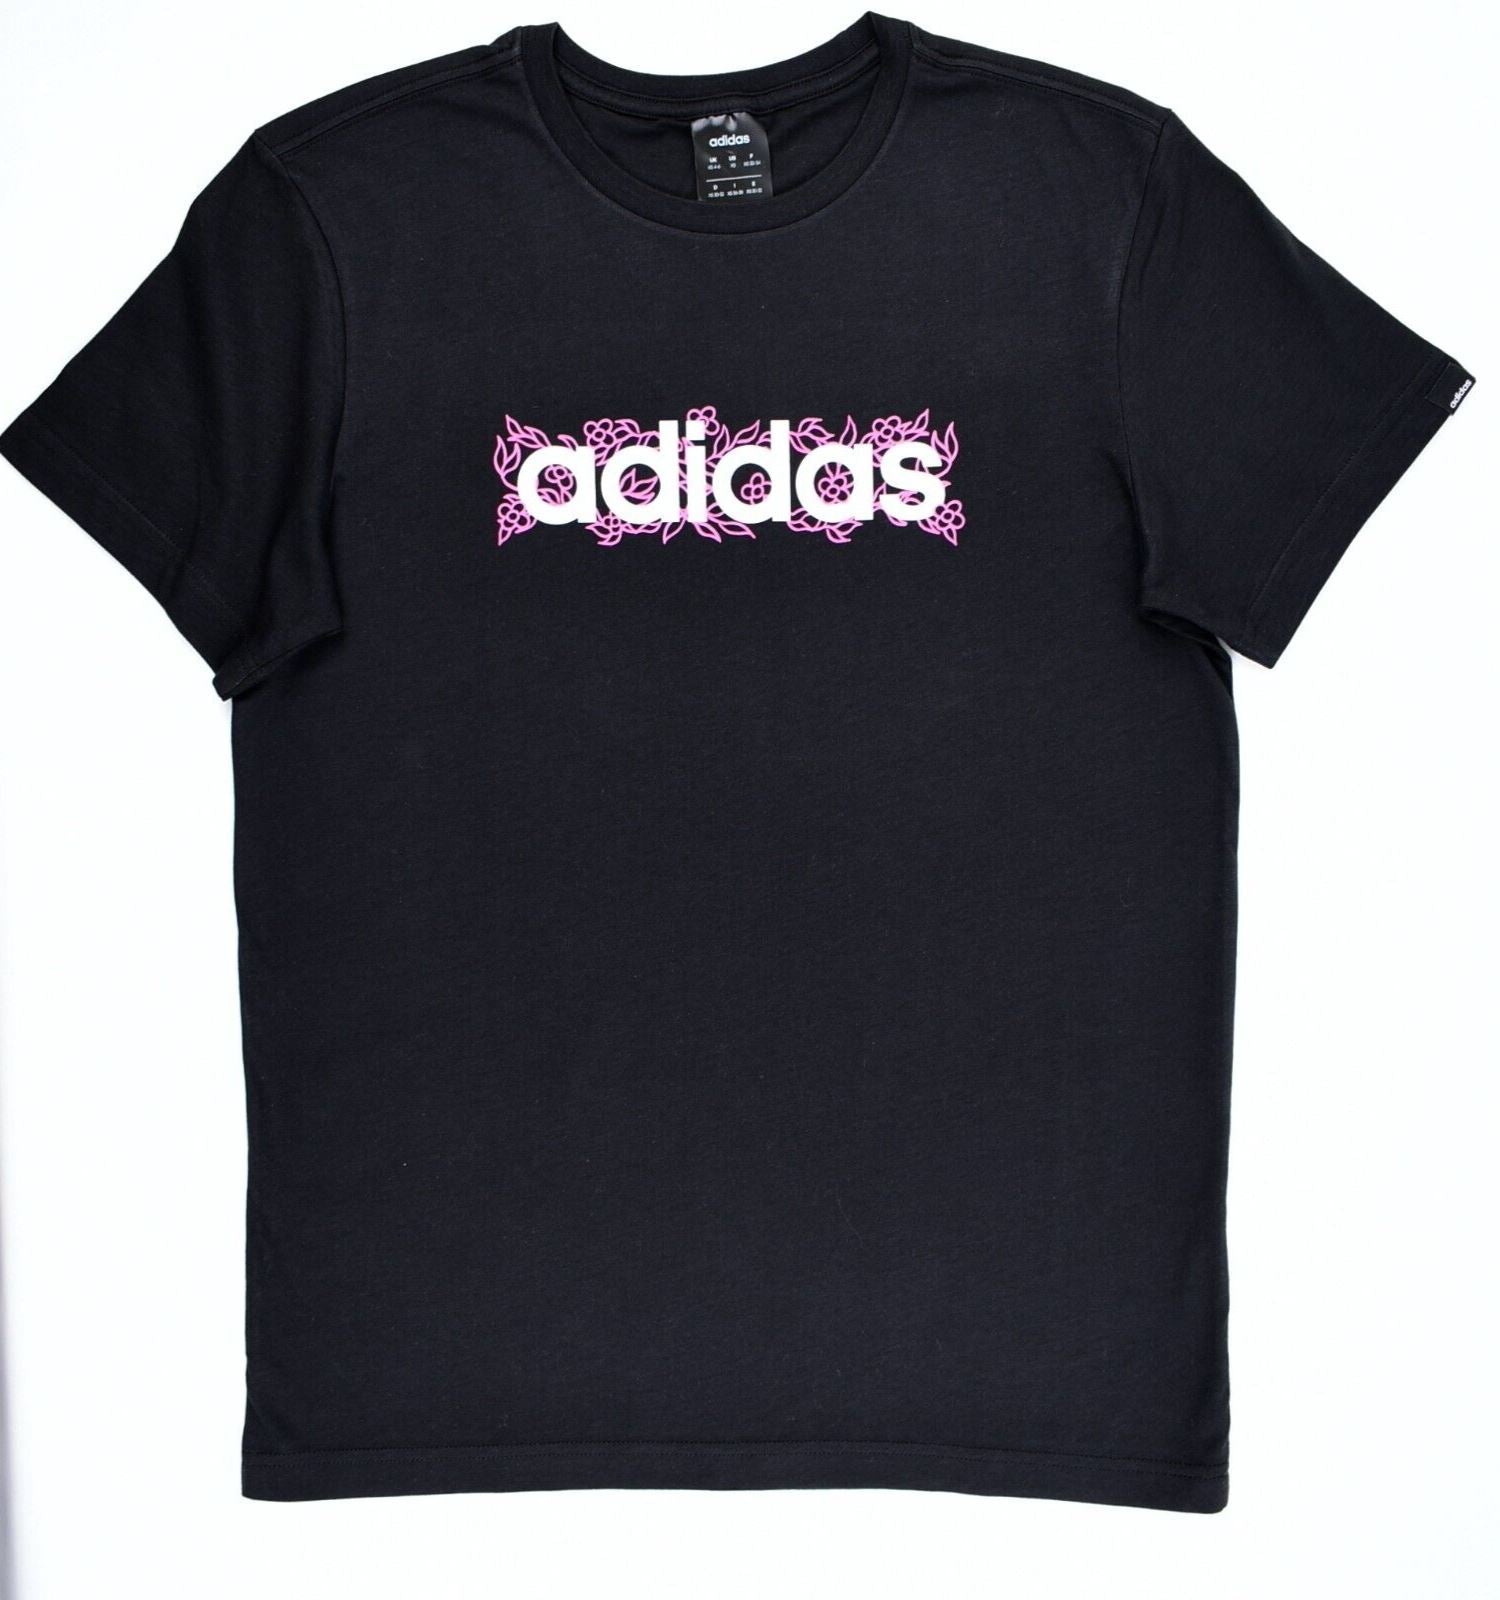 ADIDAS Women's Linear Floral Logo Crew Neck T-shirt, Black, size XS /UK 4-6